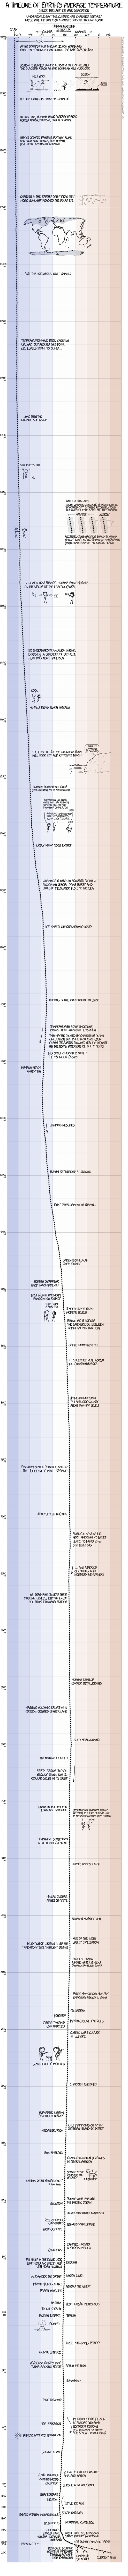 temperatrule timeline